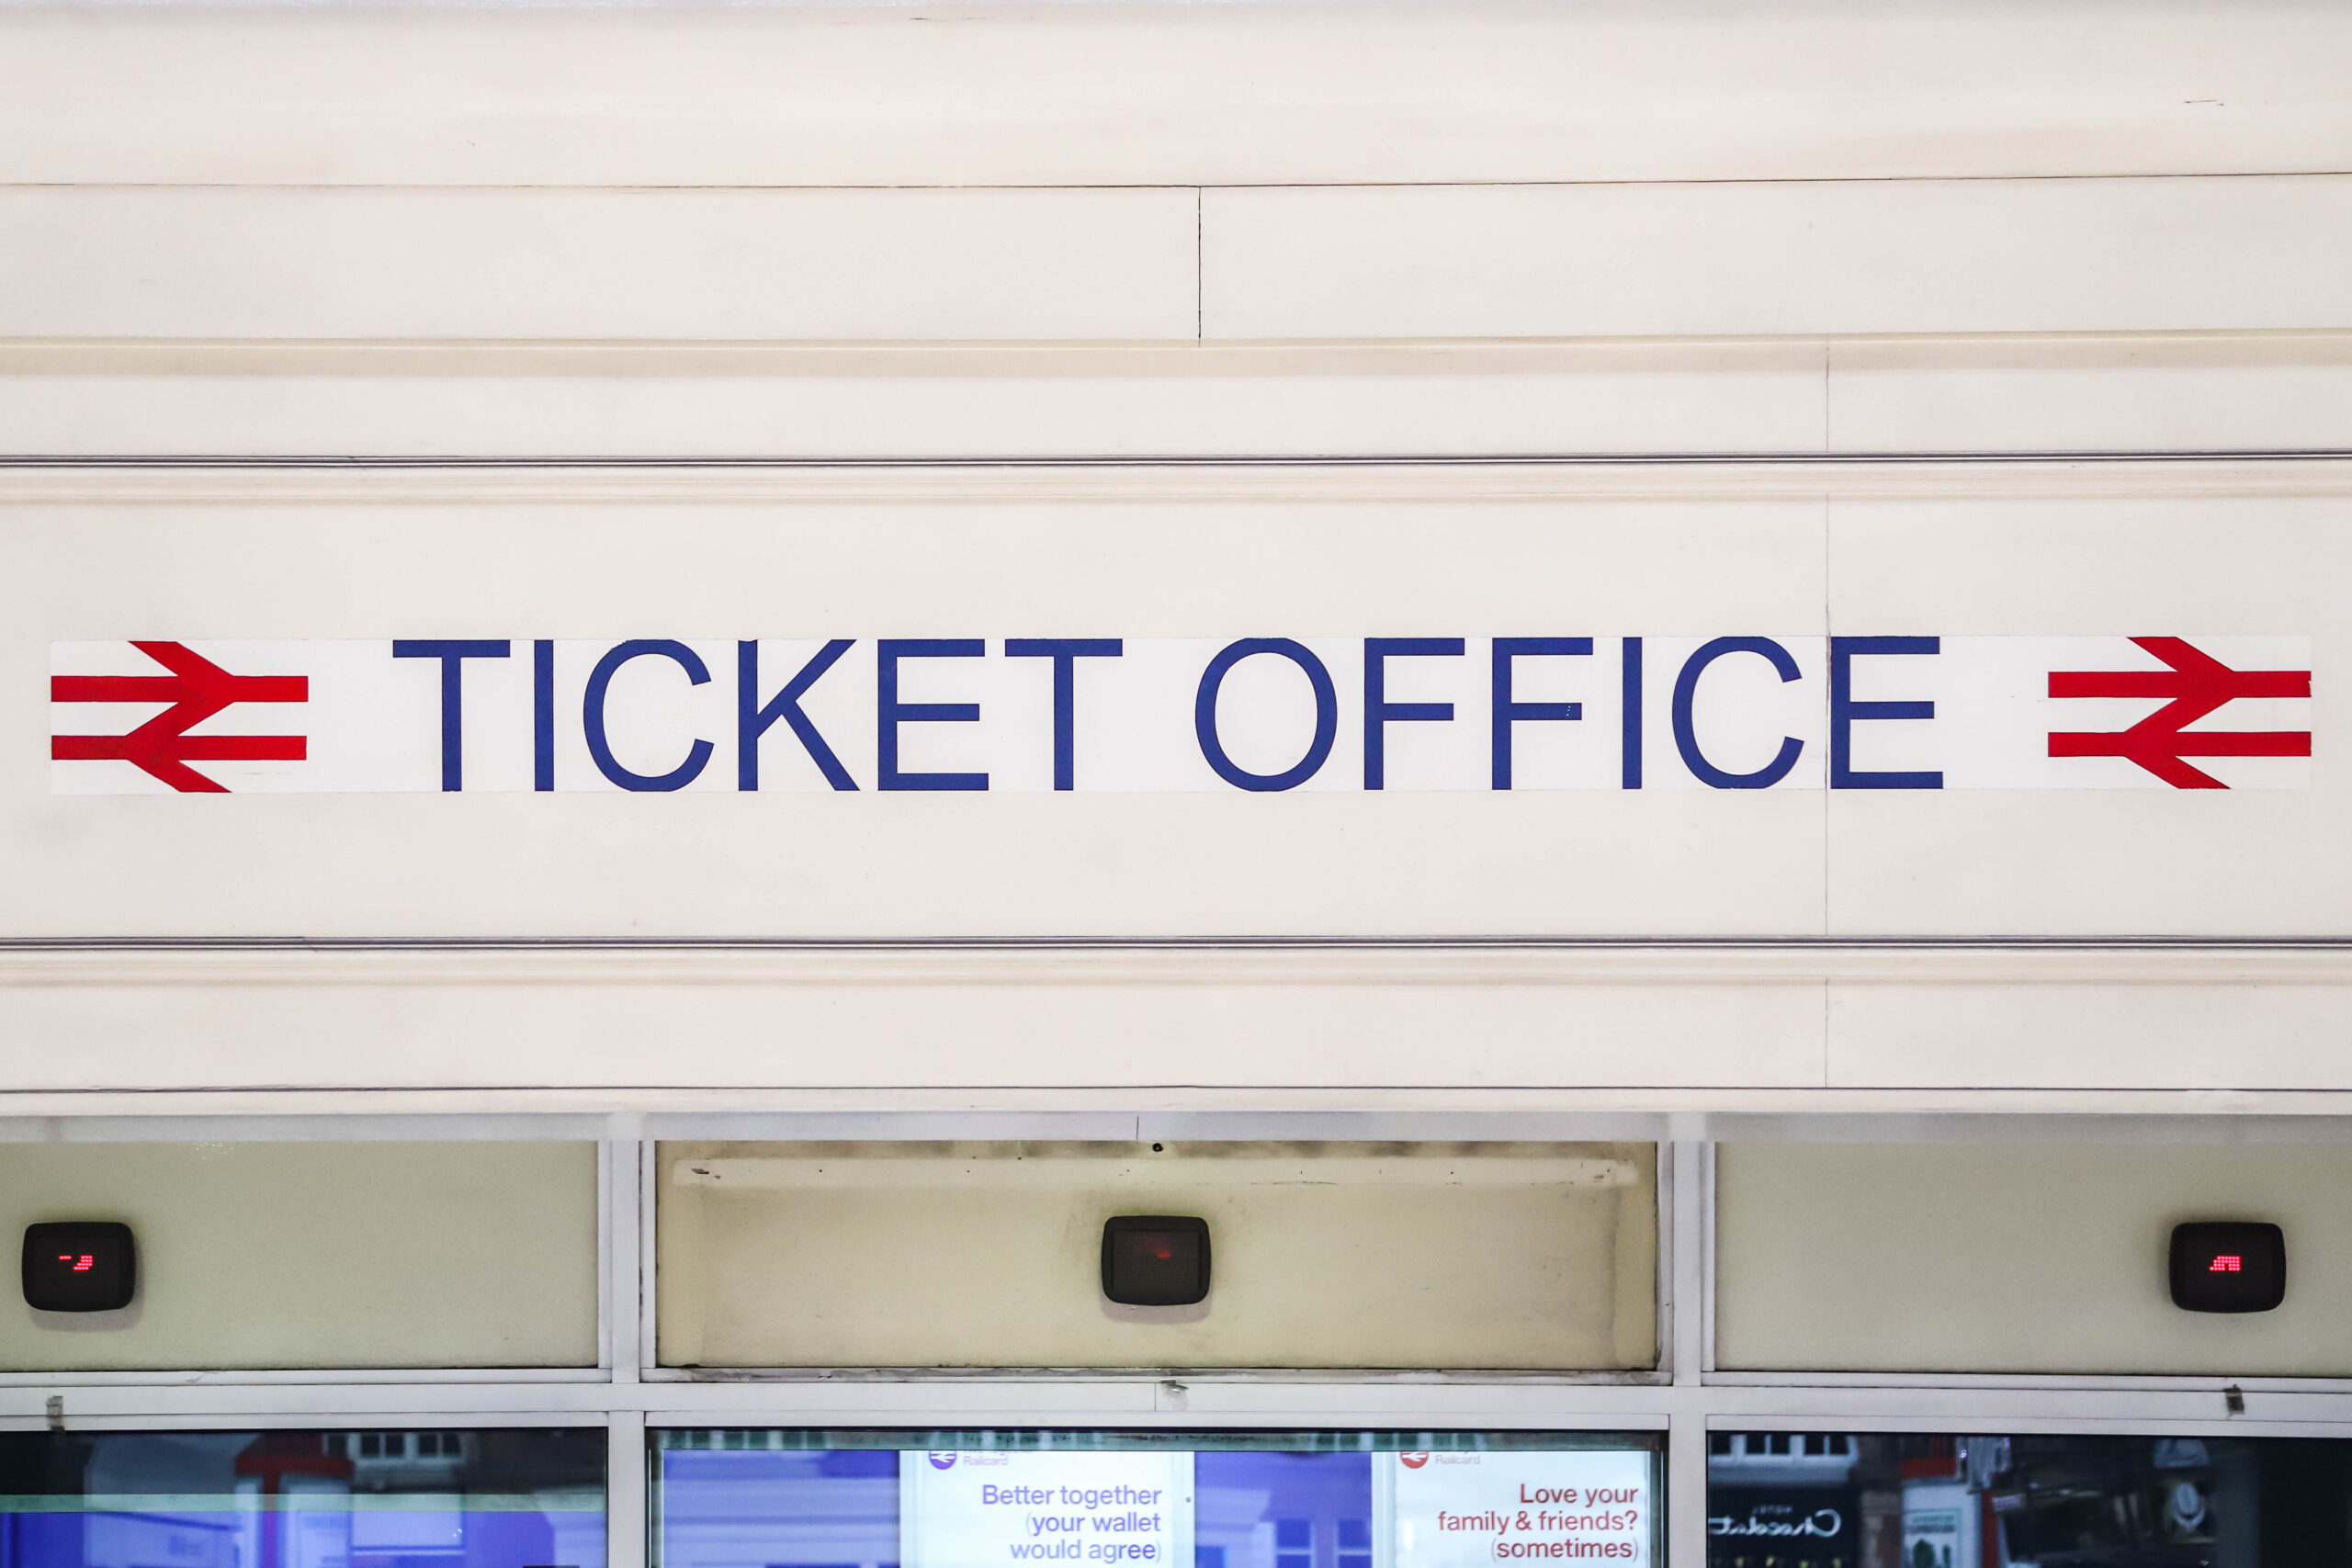 Ticket office at Marylebone